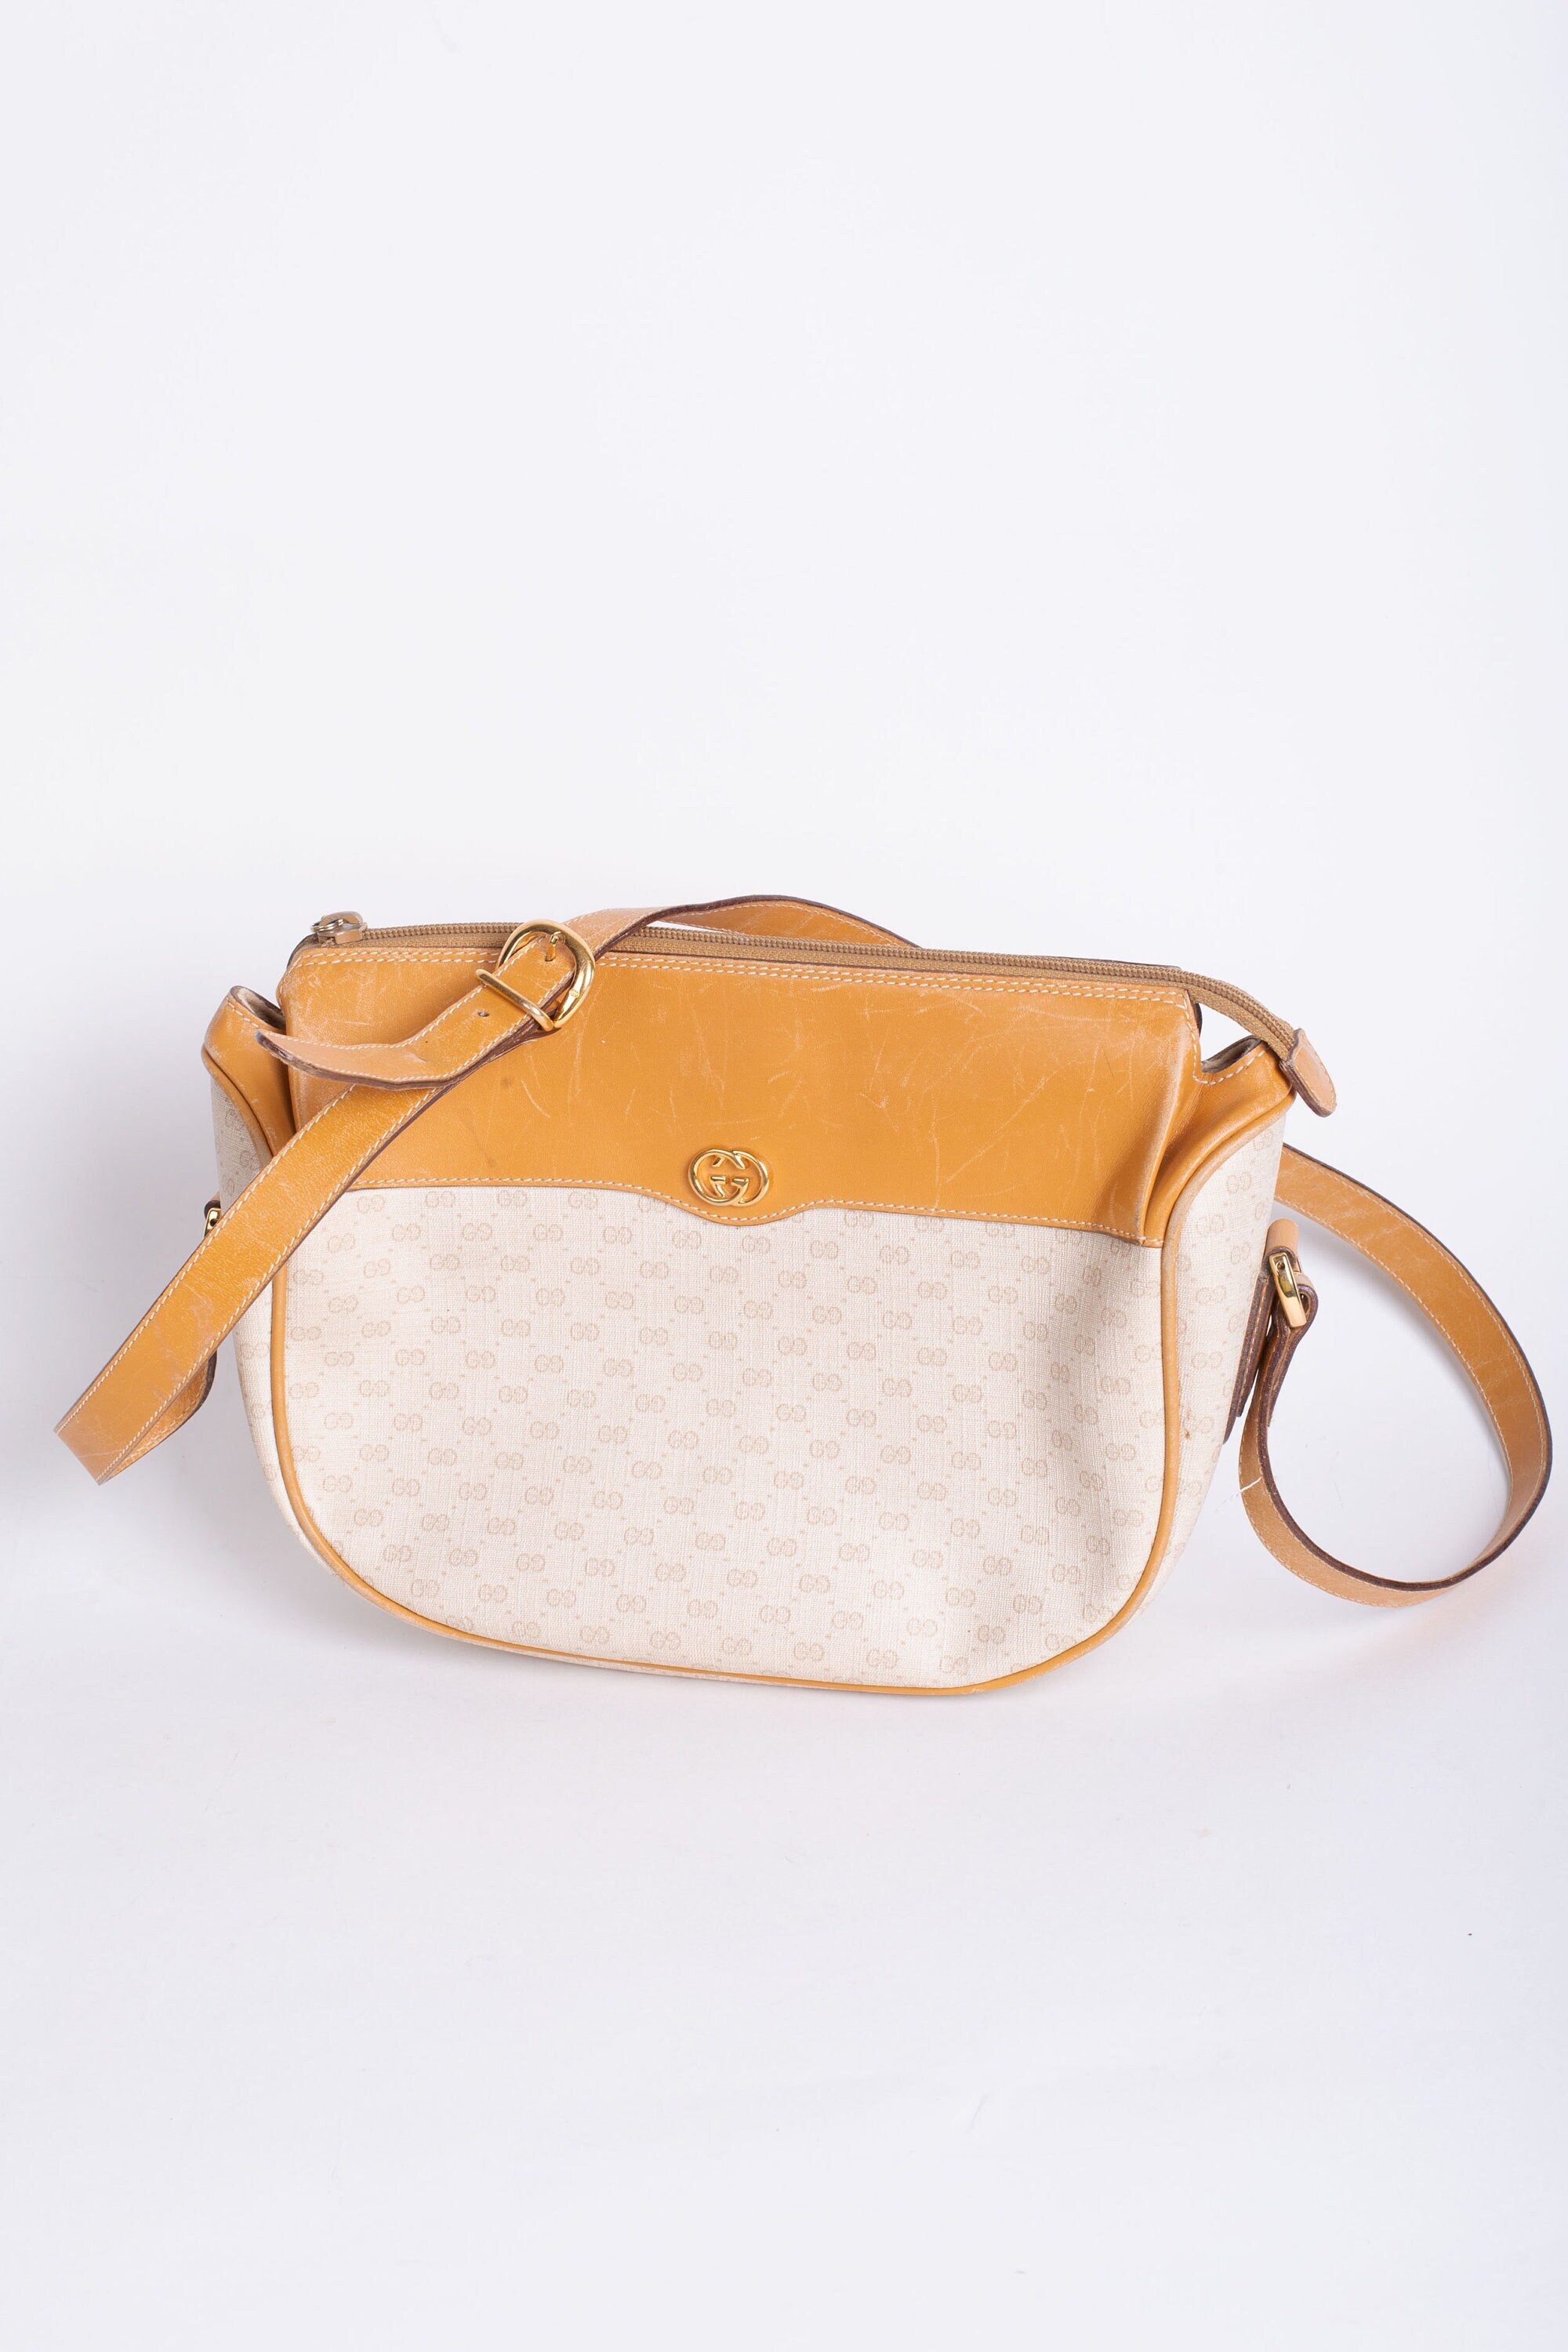 Authentic Vintage Gucci Micro GG Clutch Hand Bag Shoulder Bag